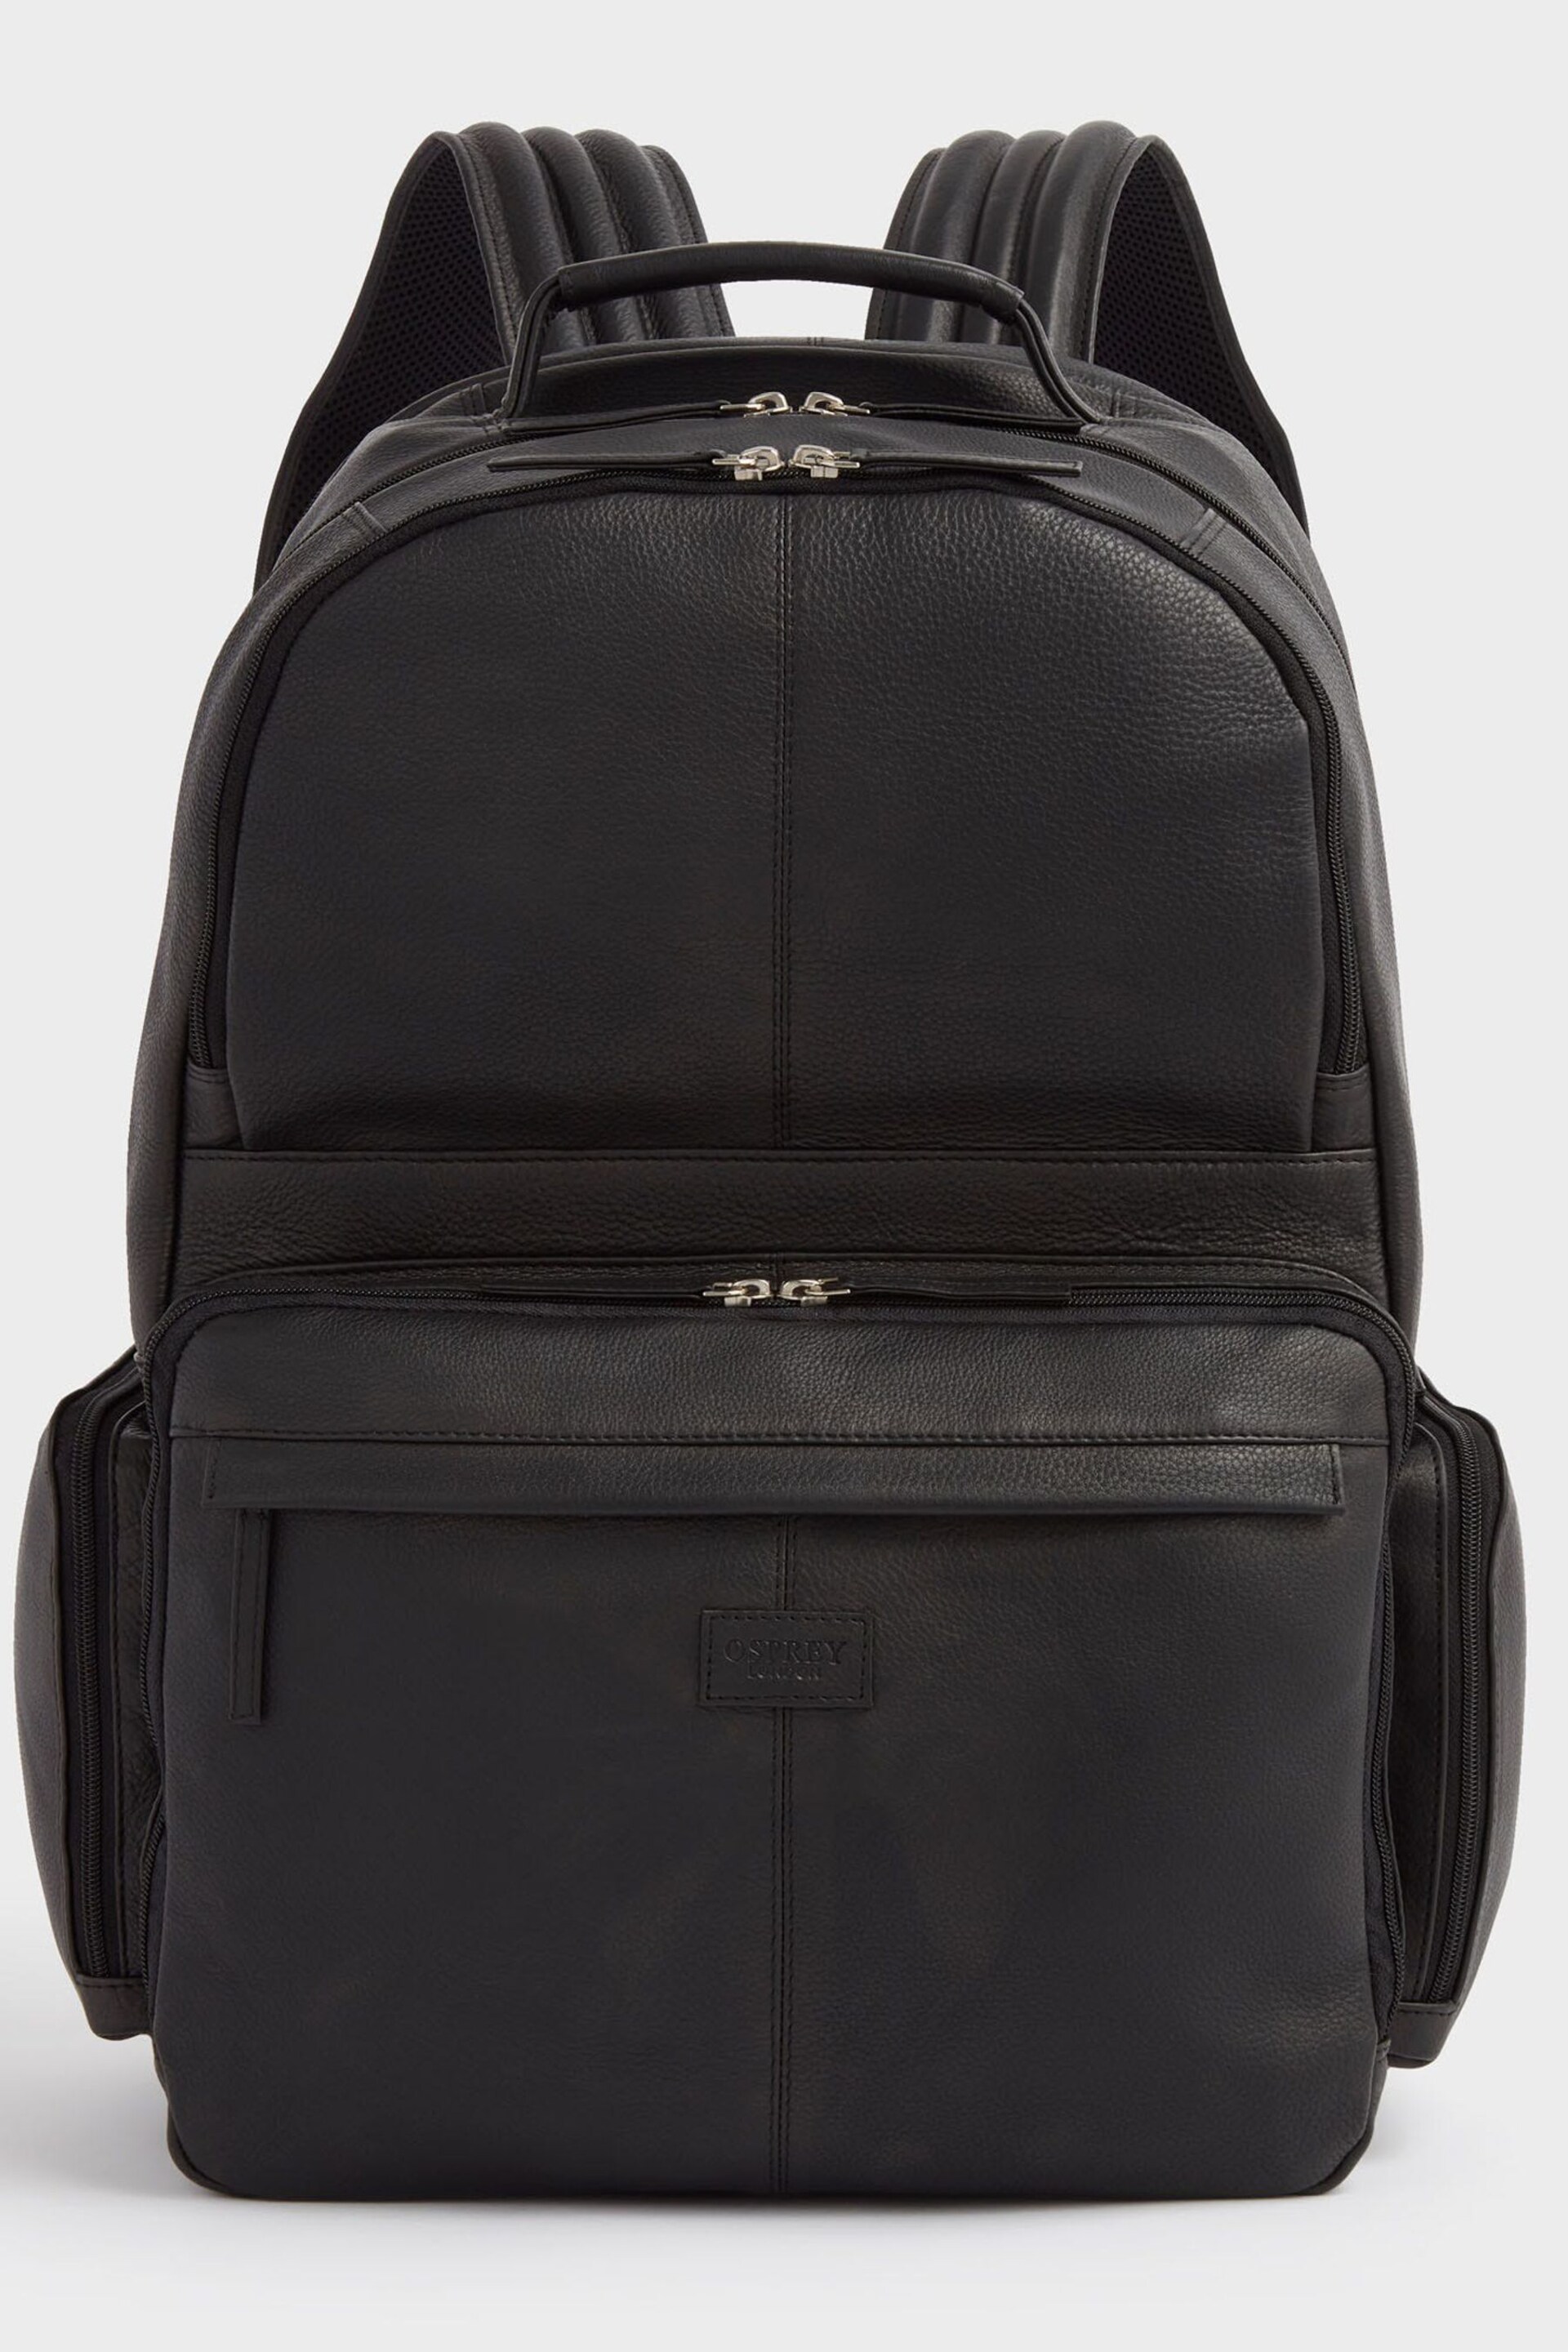 OSPREY LONDON The Lockton Black Leather Backpack - Image 1 of 2